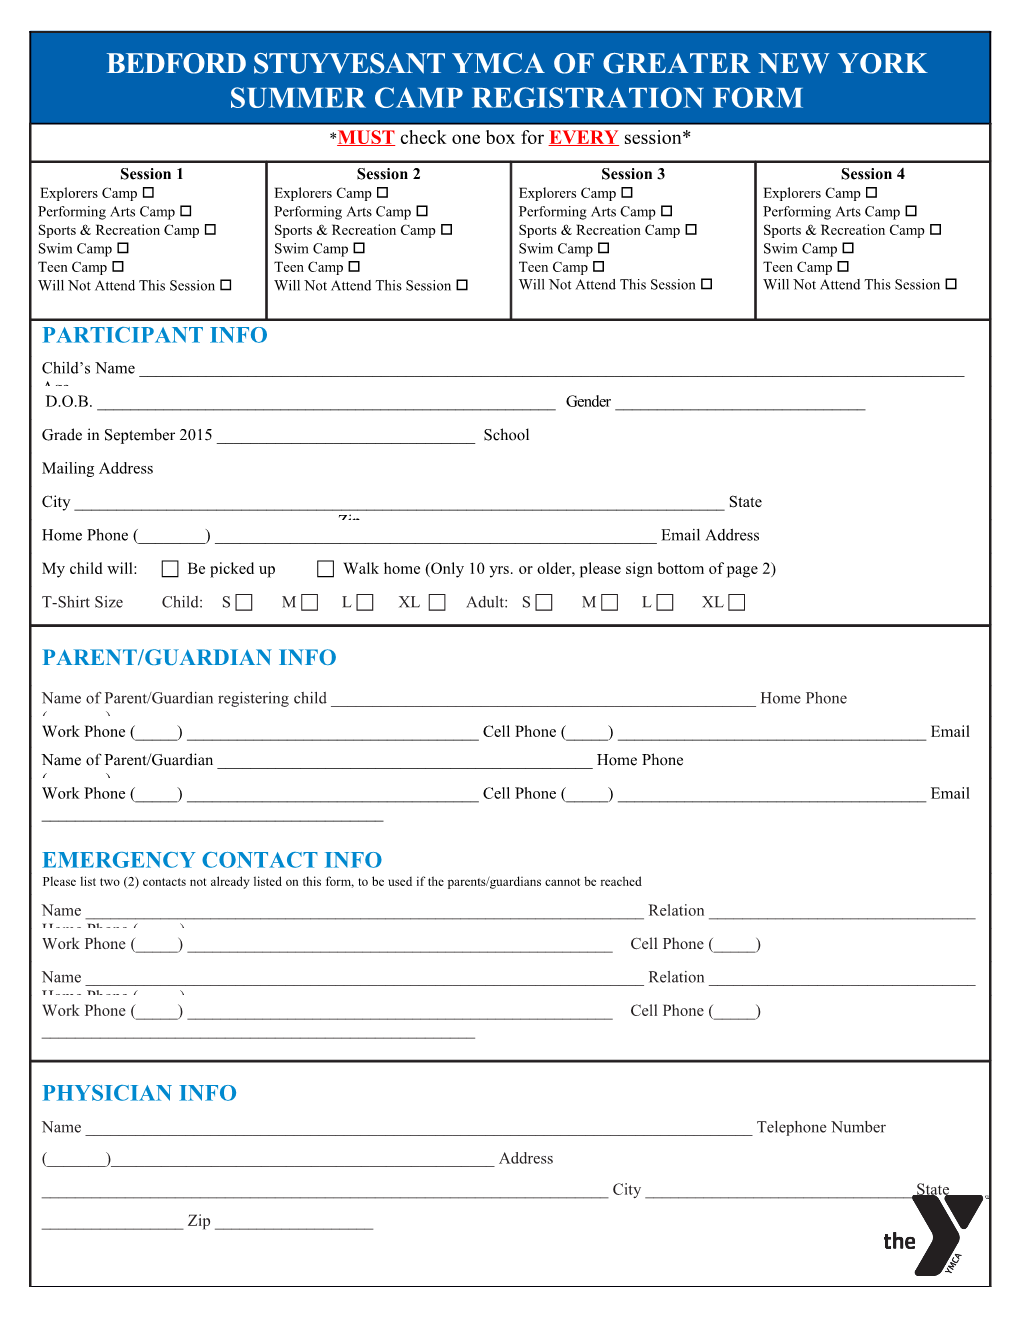 Bedford Stuyvesant Ymca Summer Camp Registration Form